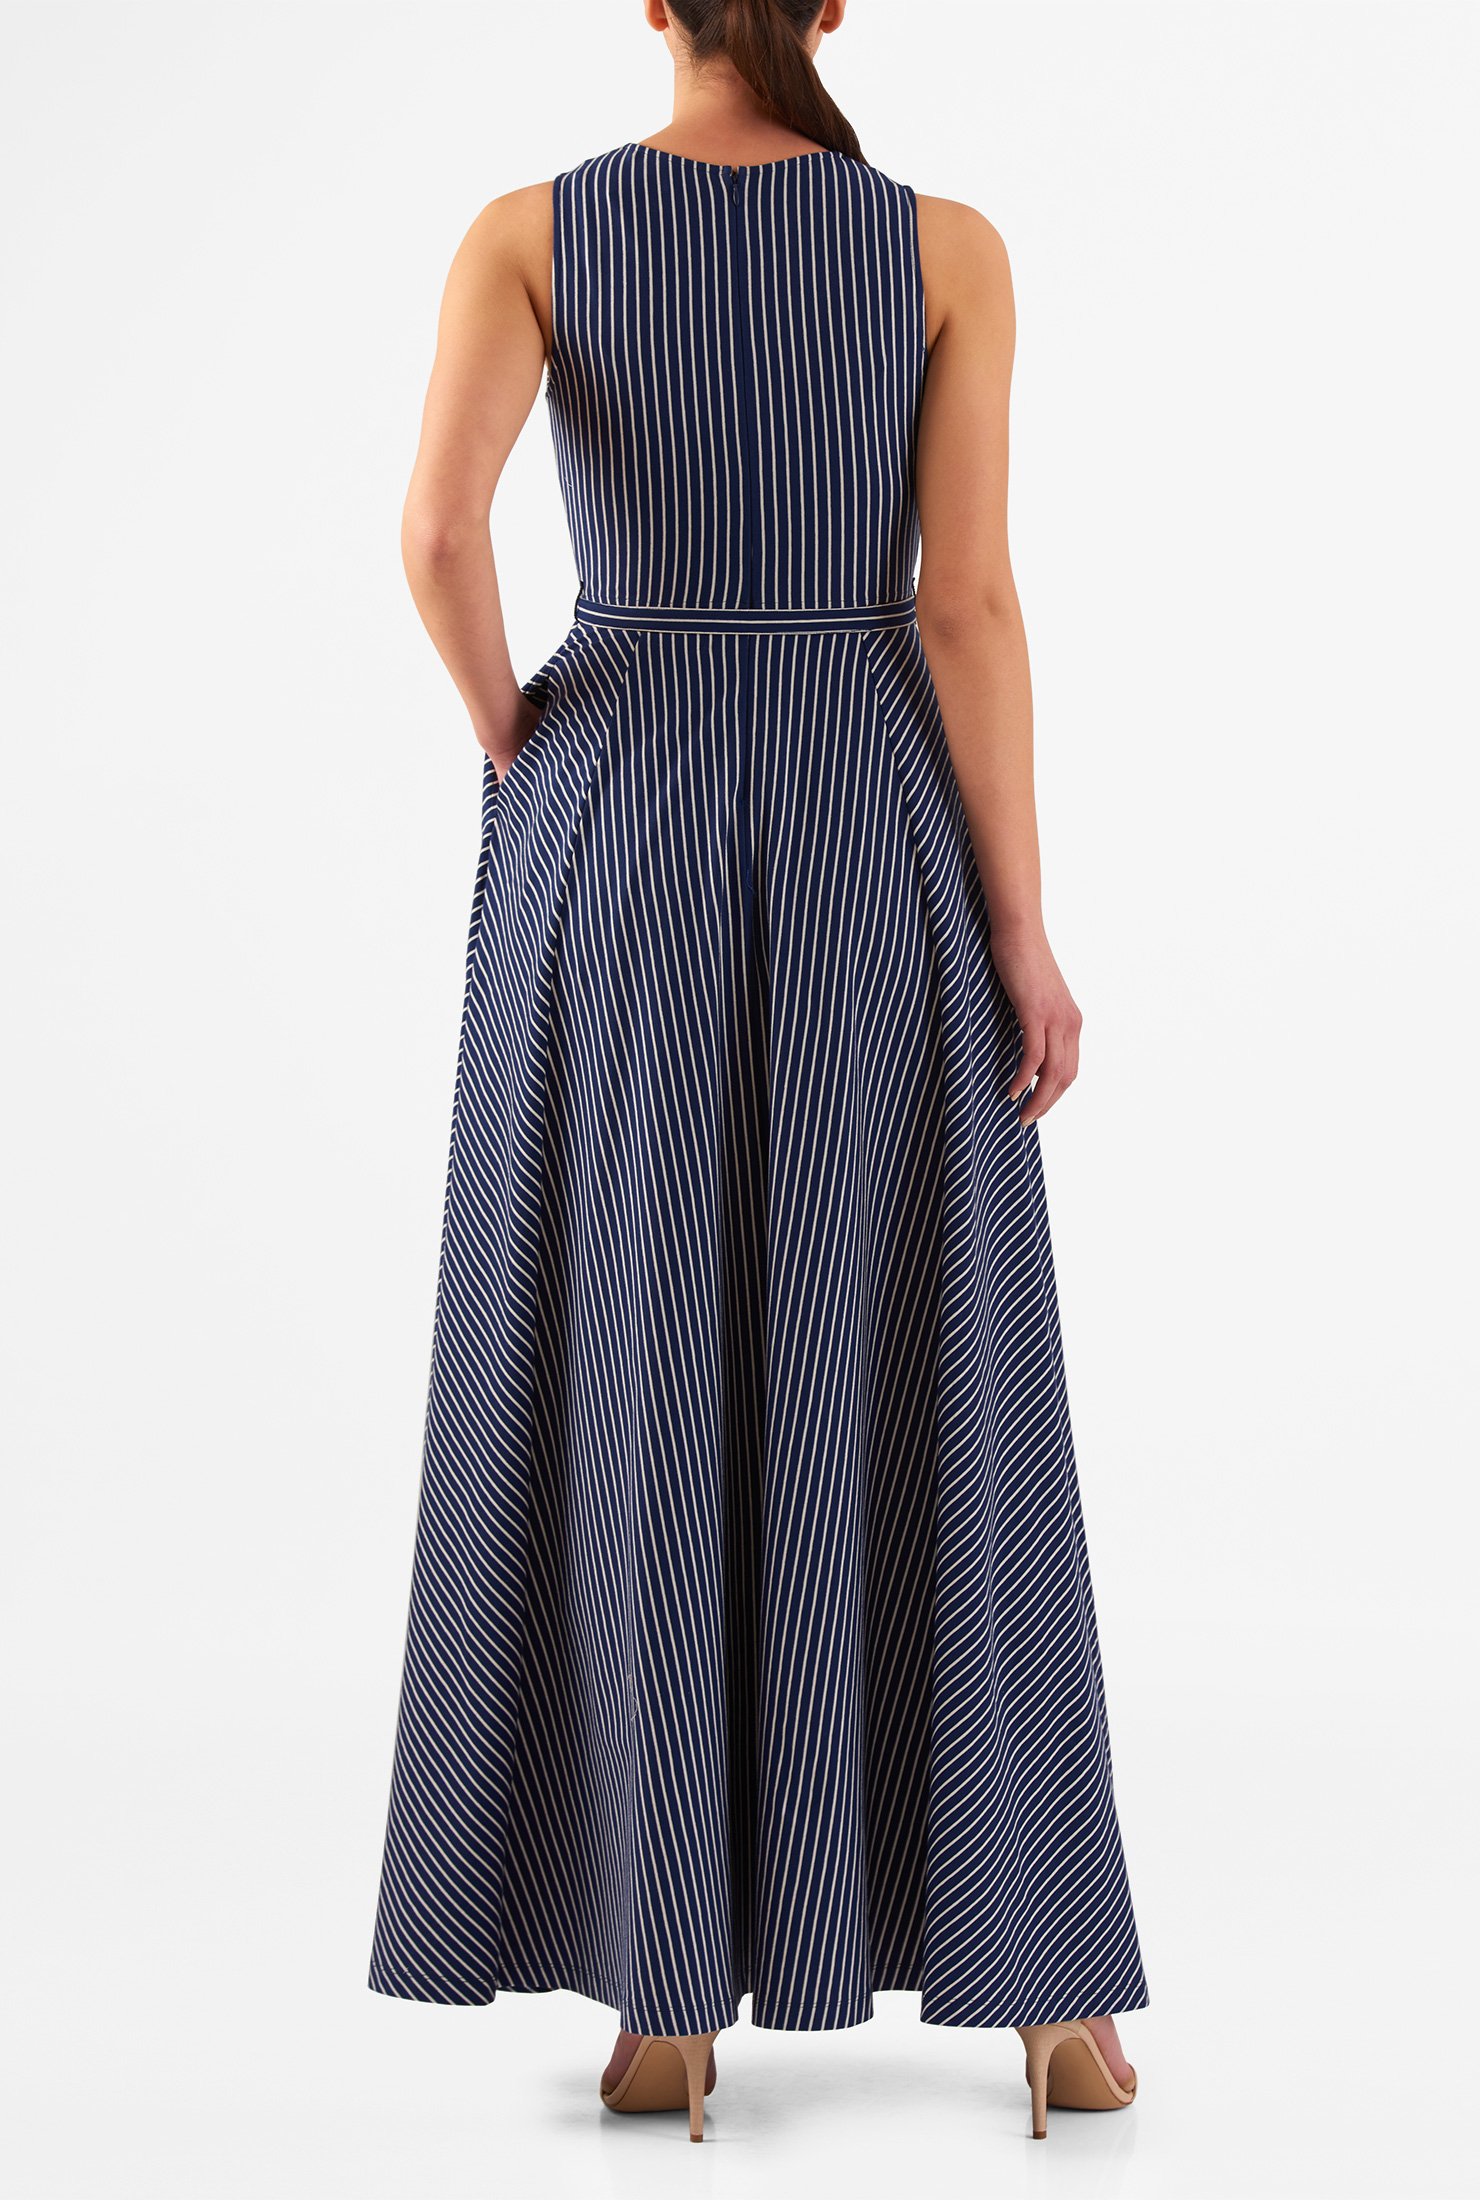 Shop Stripe cotton knit belted maxi dress | eShakti